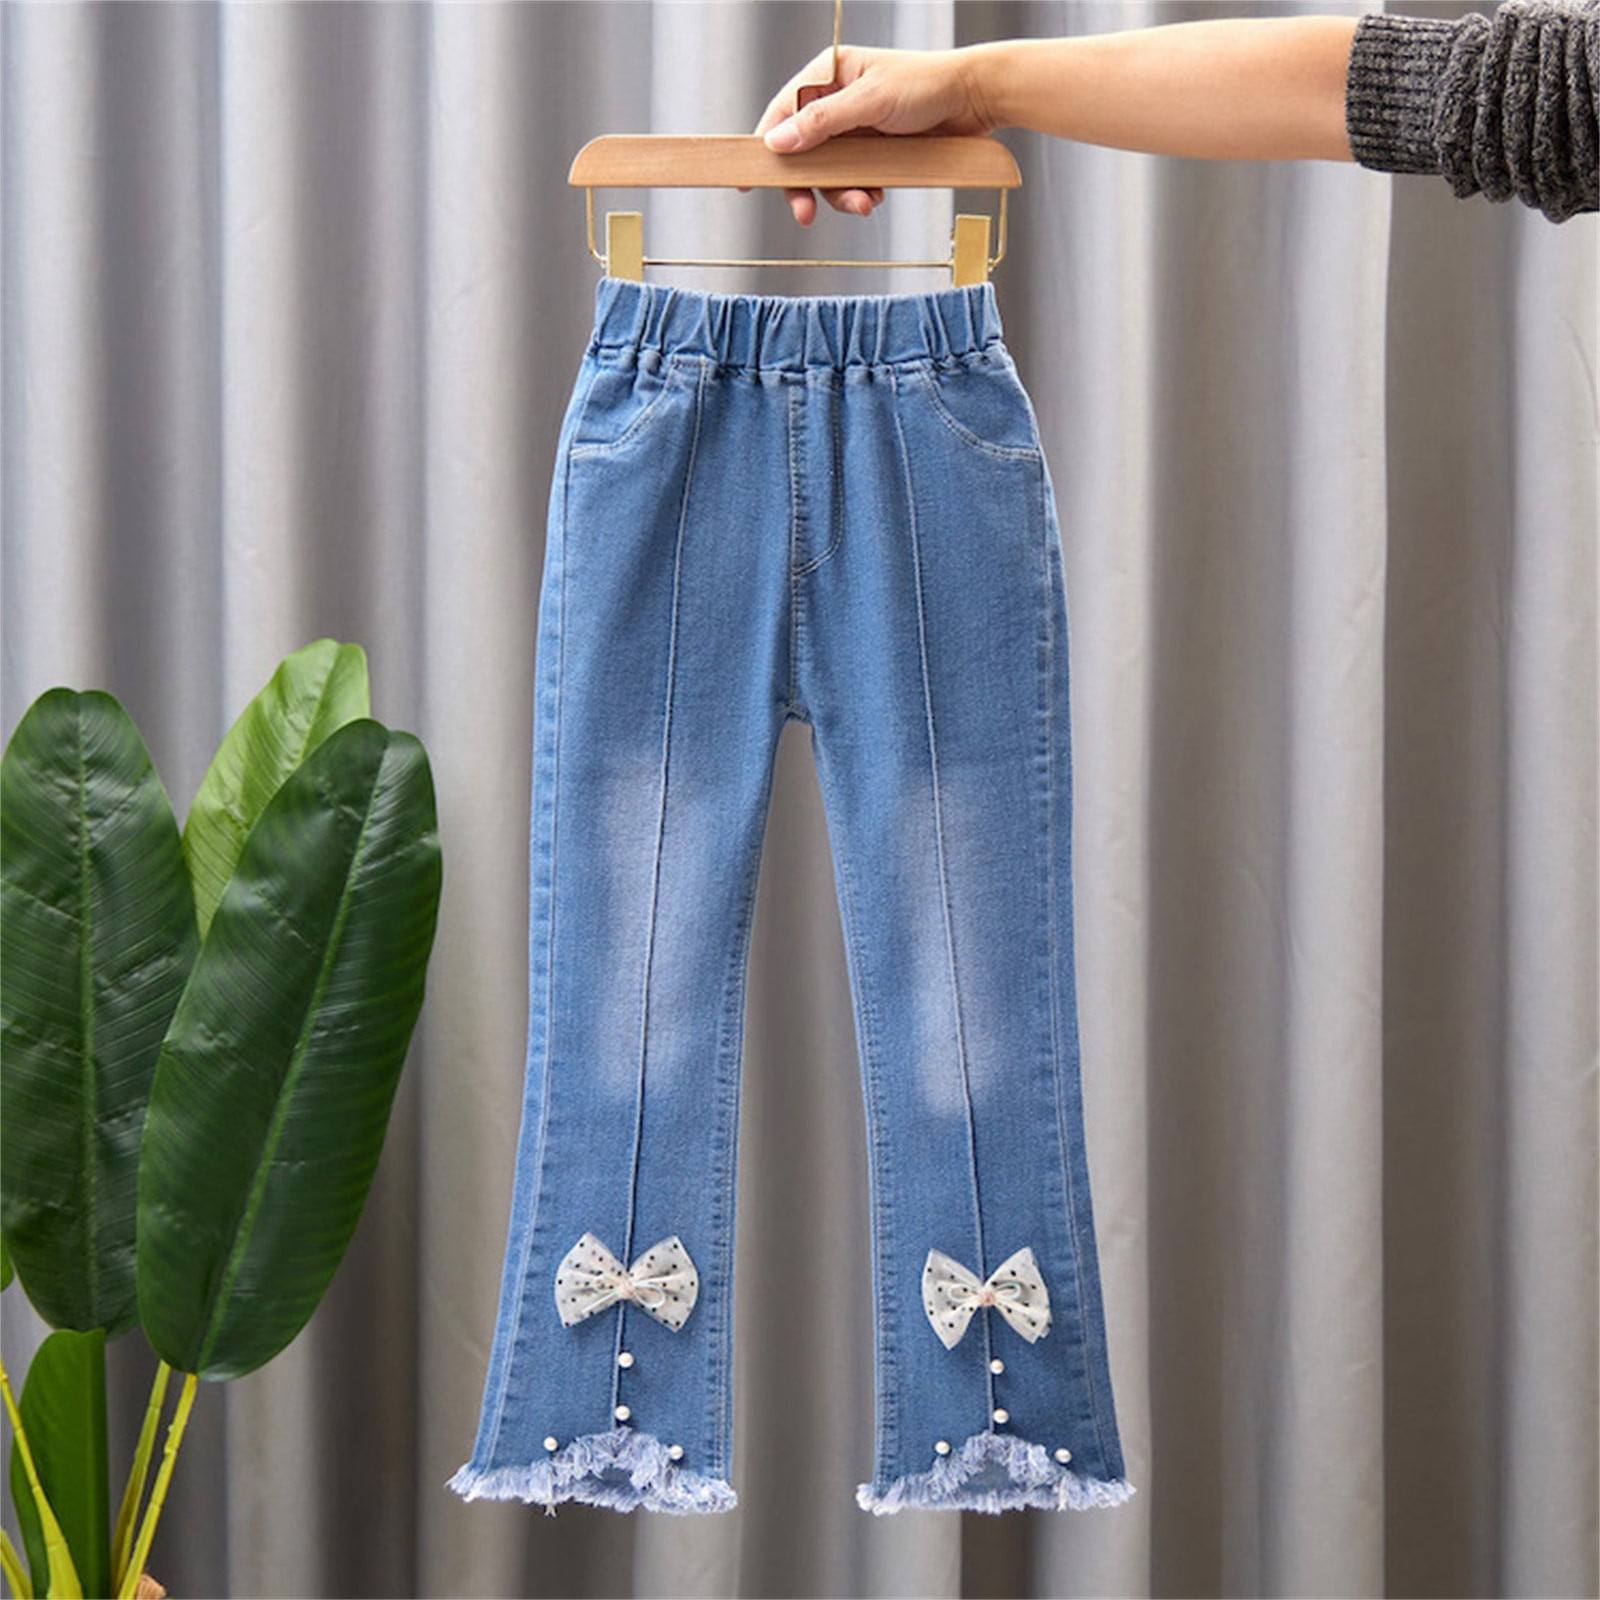 Cute Sleepwear Pants for Girl Stock Image - Image of daughter, girl:  107681459